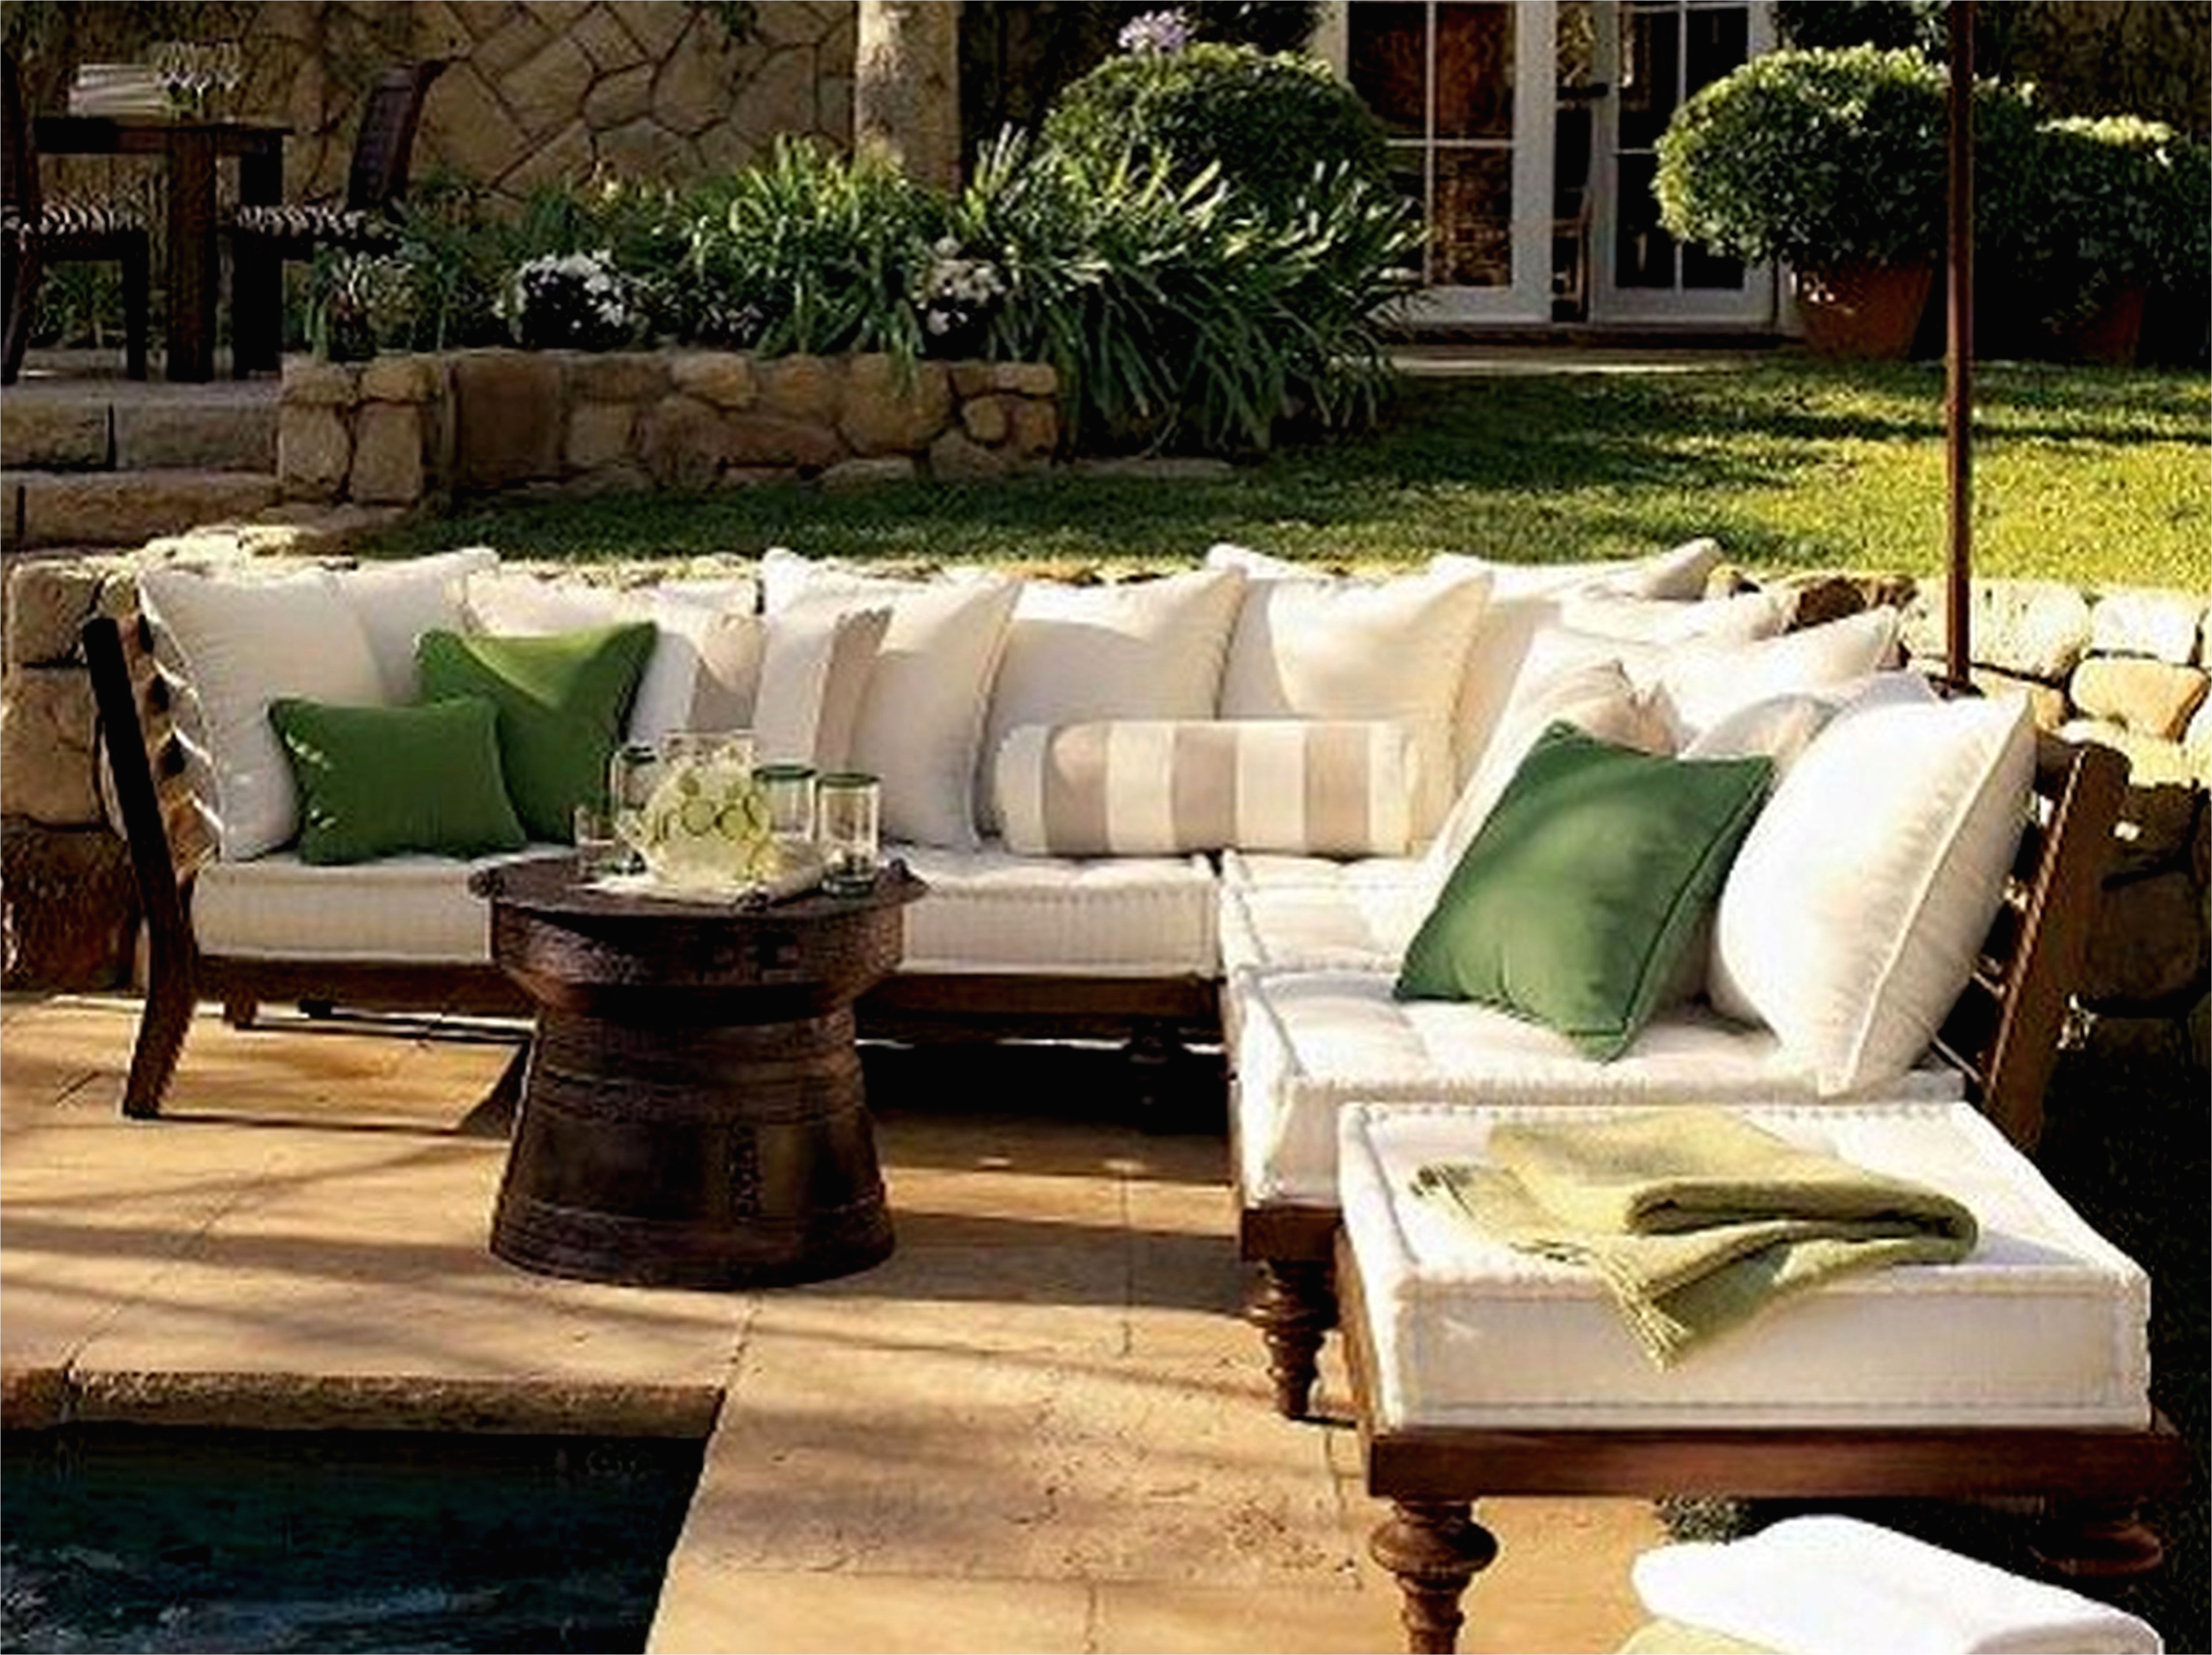 rent to own furniture furniture rental scheme of outdoor furniture